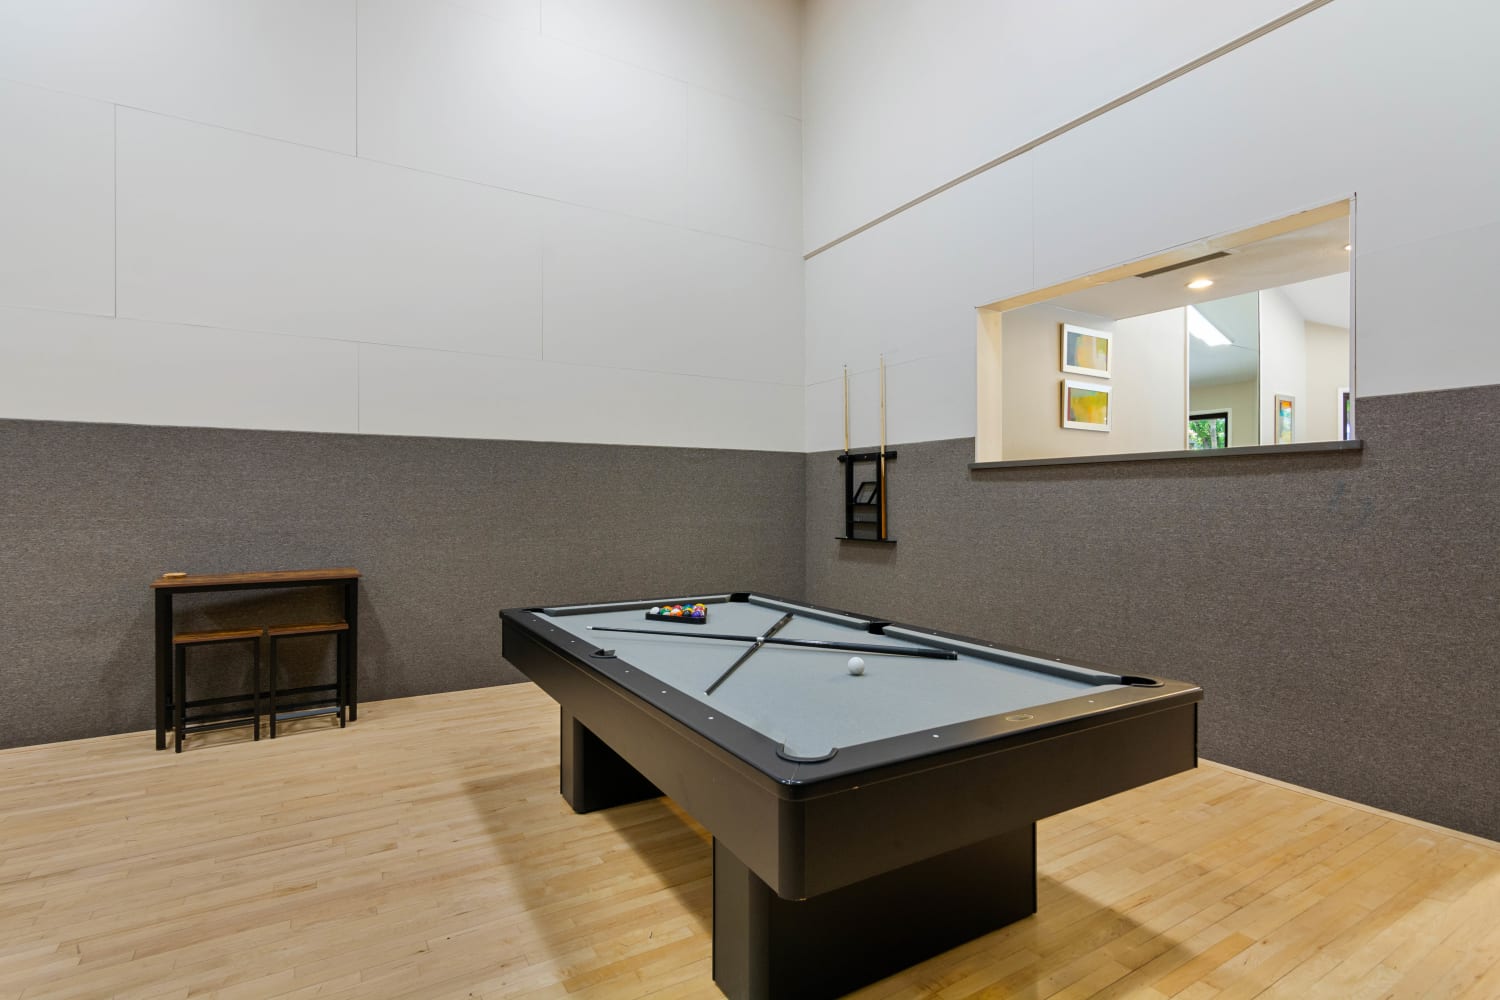 Ping pong table at Waterford Place Apartments in Mesa, Arizona